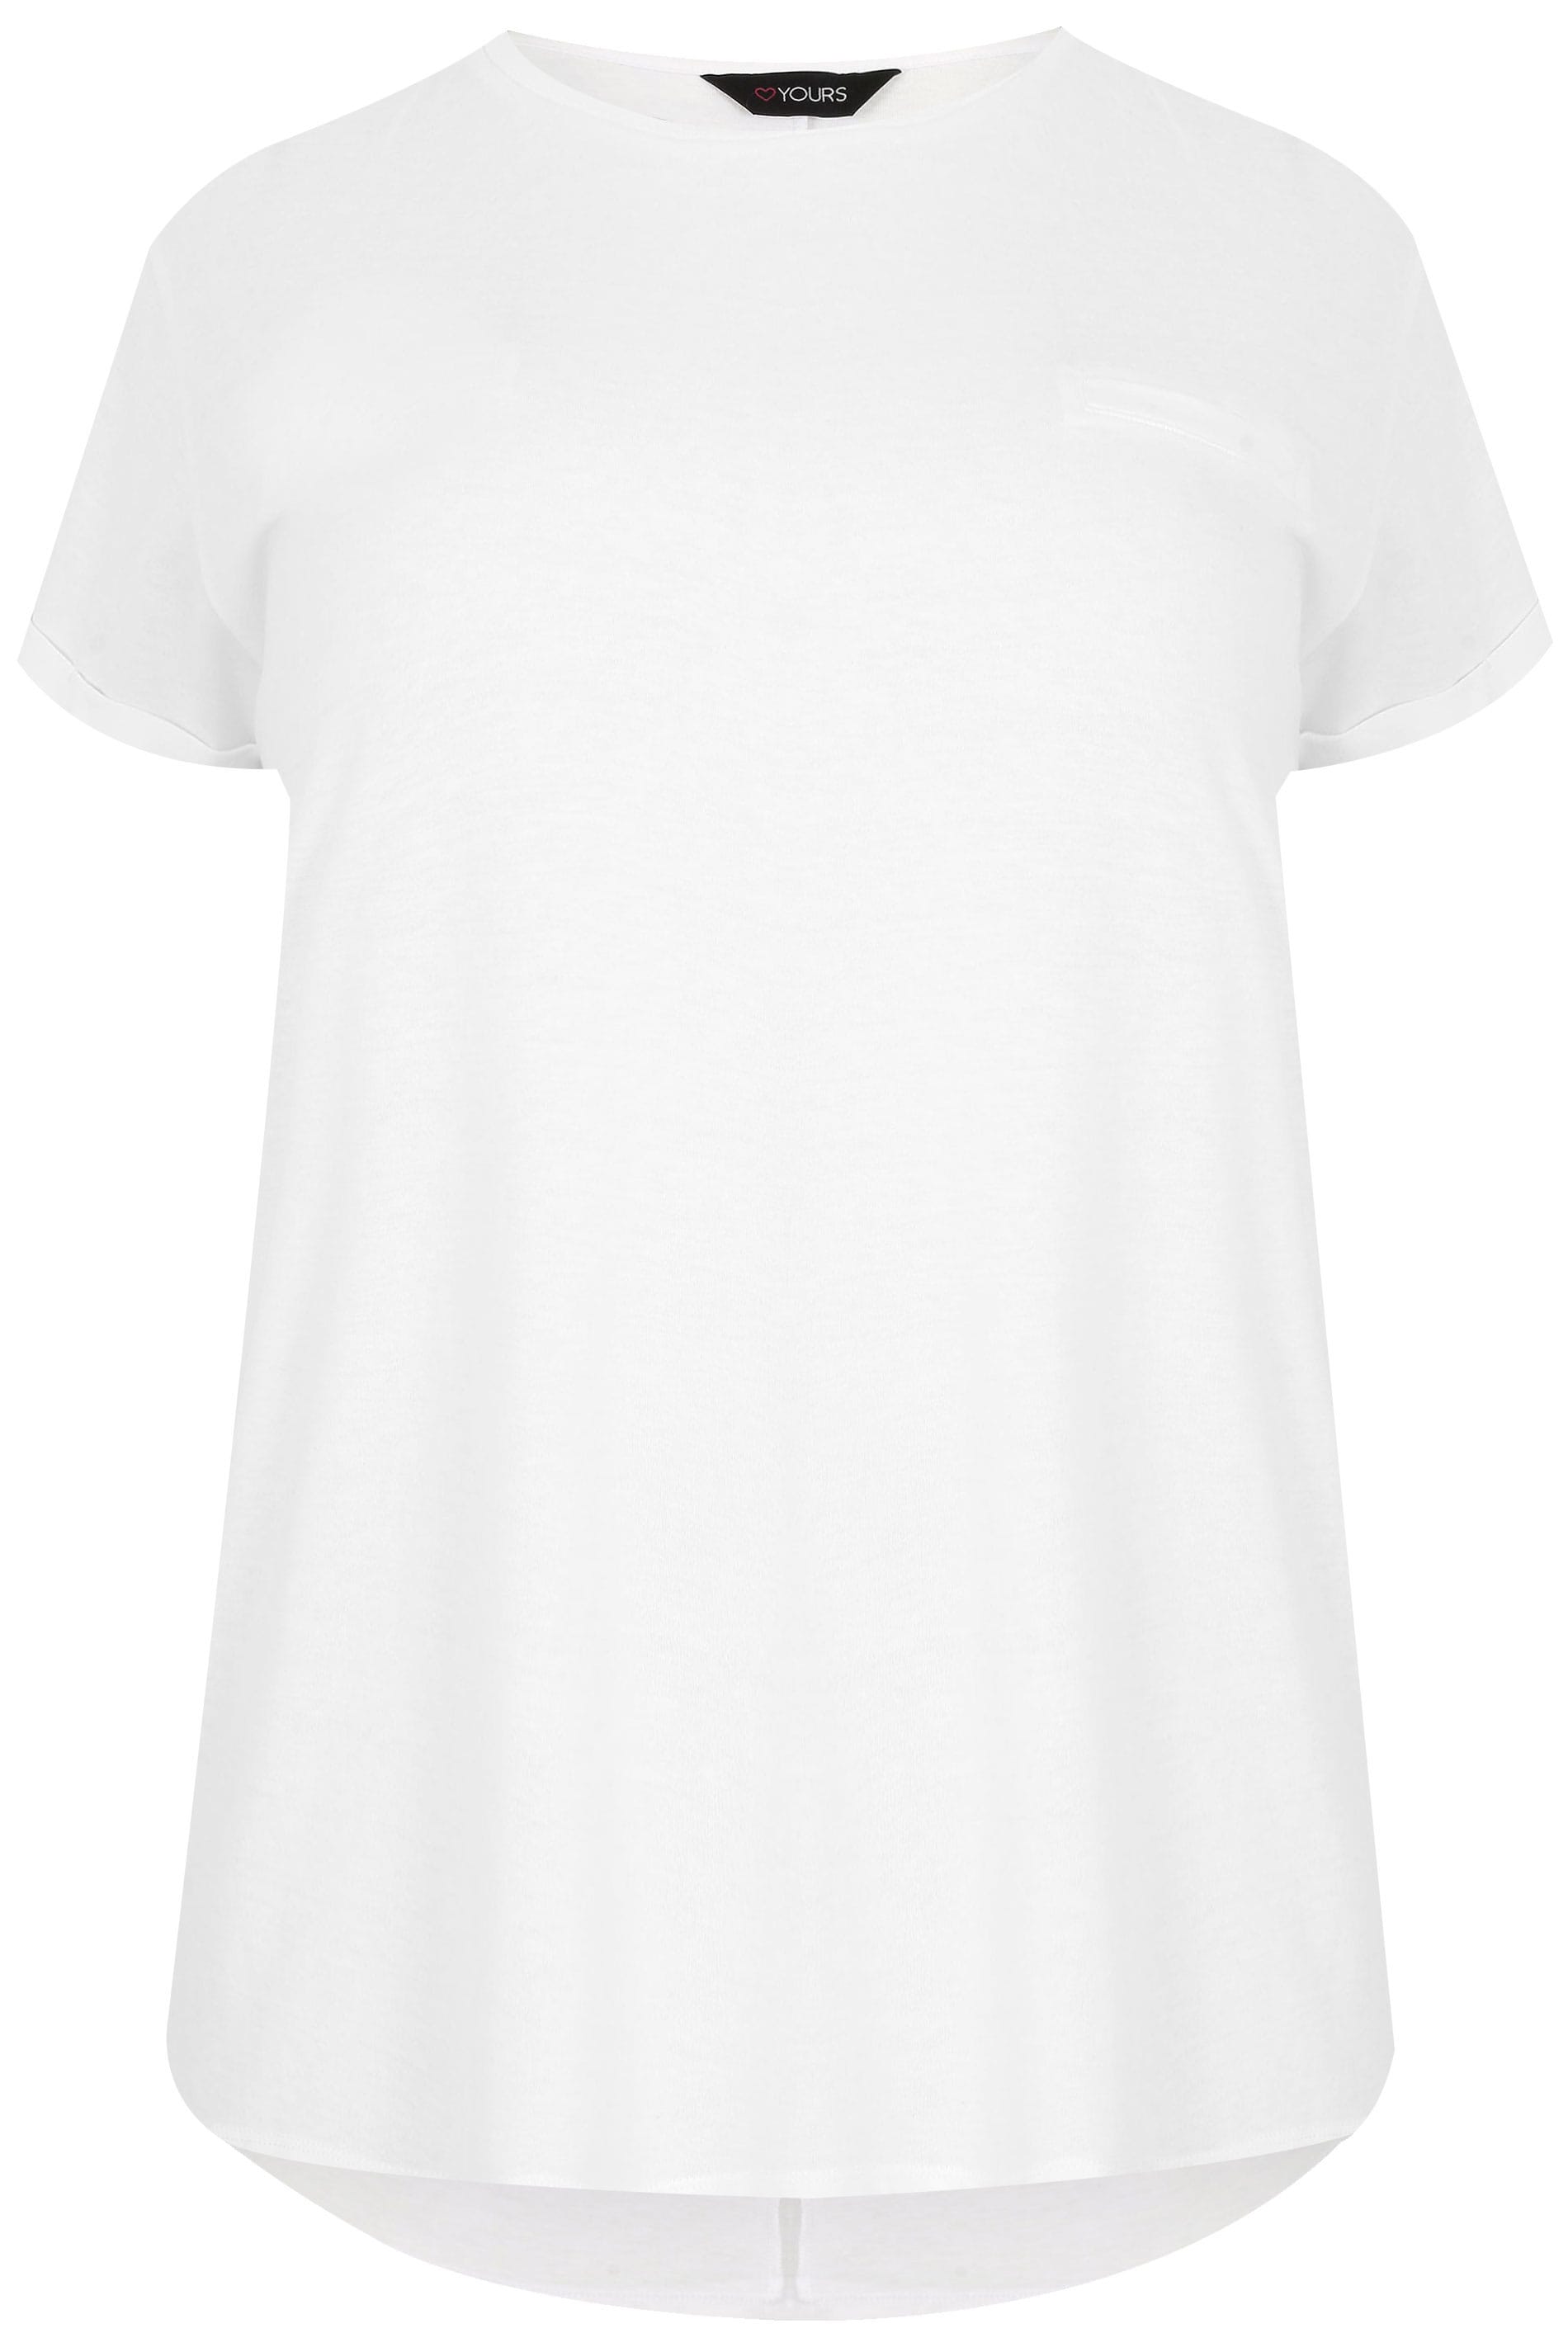 Download Plus Size White Mock Pocket T-Shirt | Sizes 16 to 36 ...